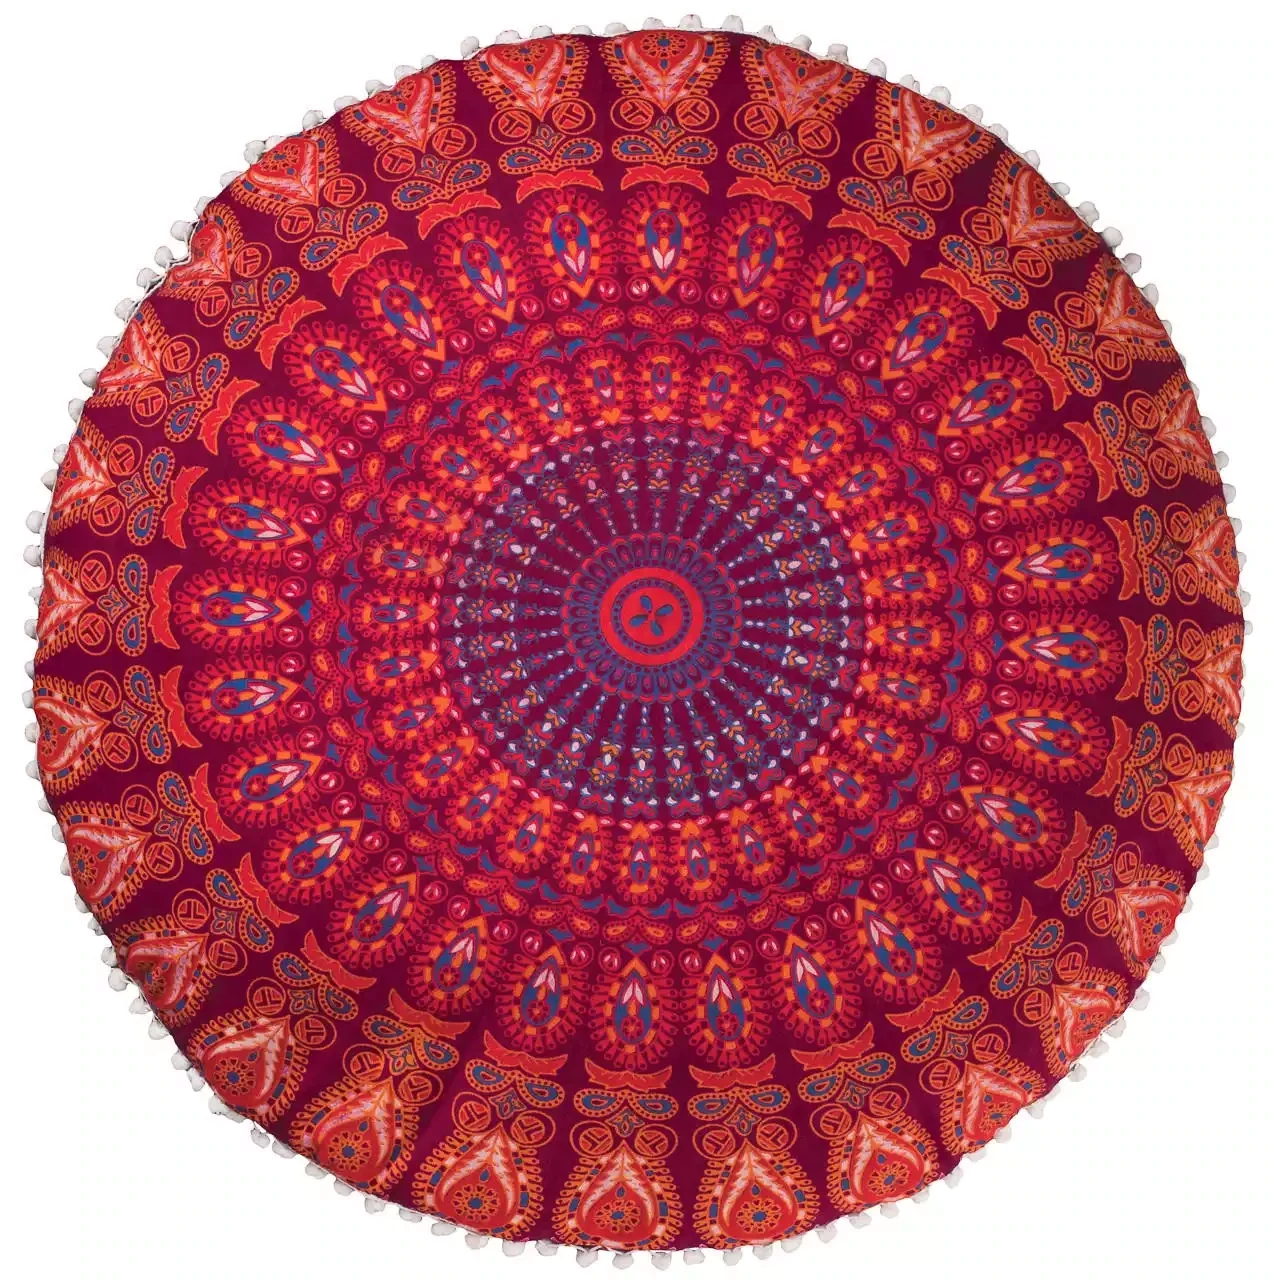 Peacock Cotton Floor Cushion - Maroon by Namaste